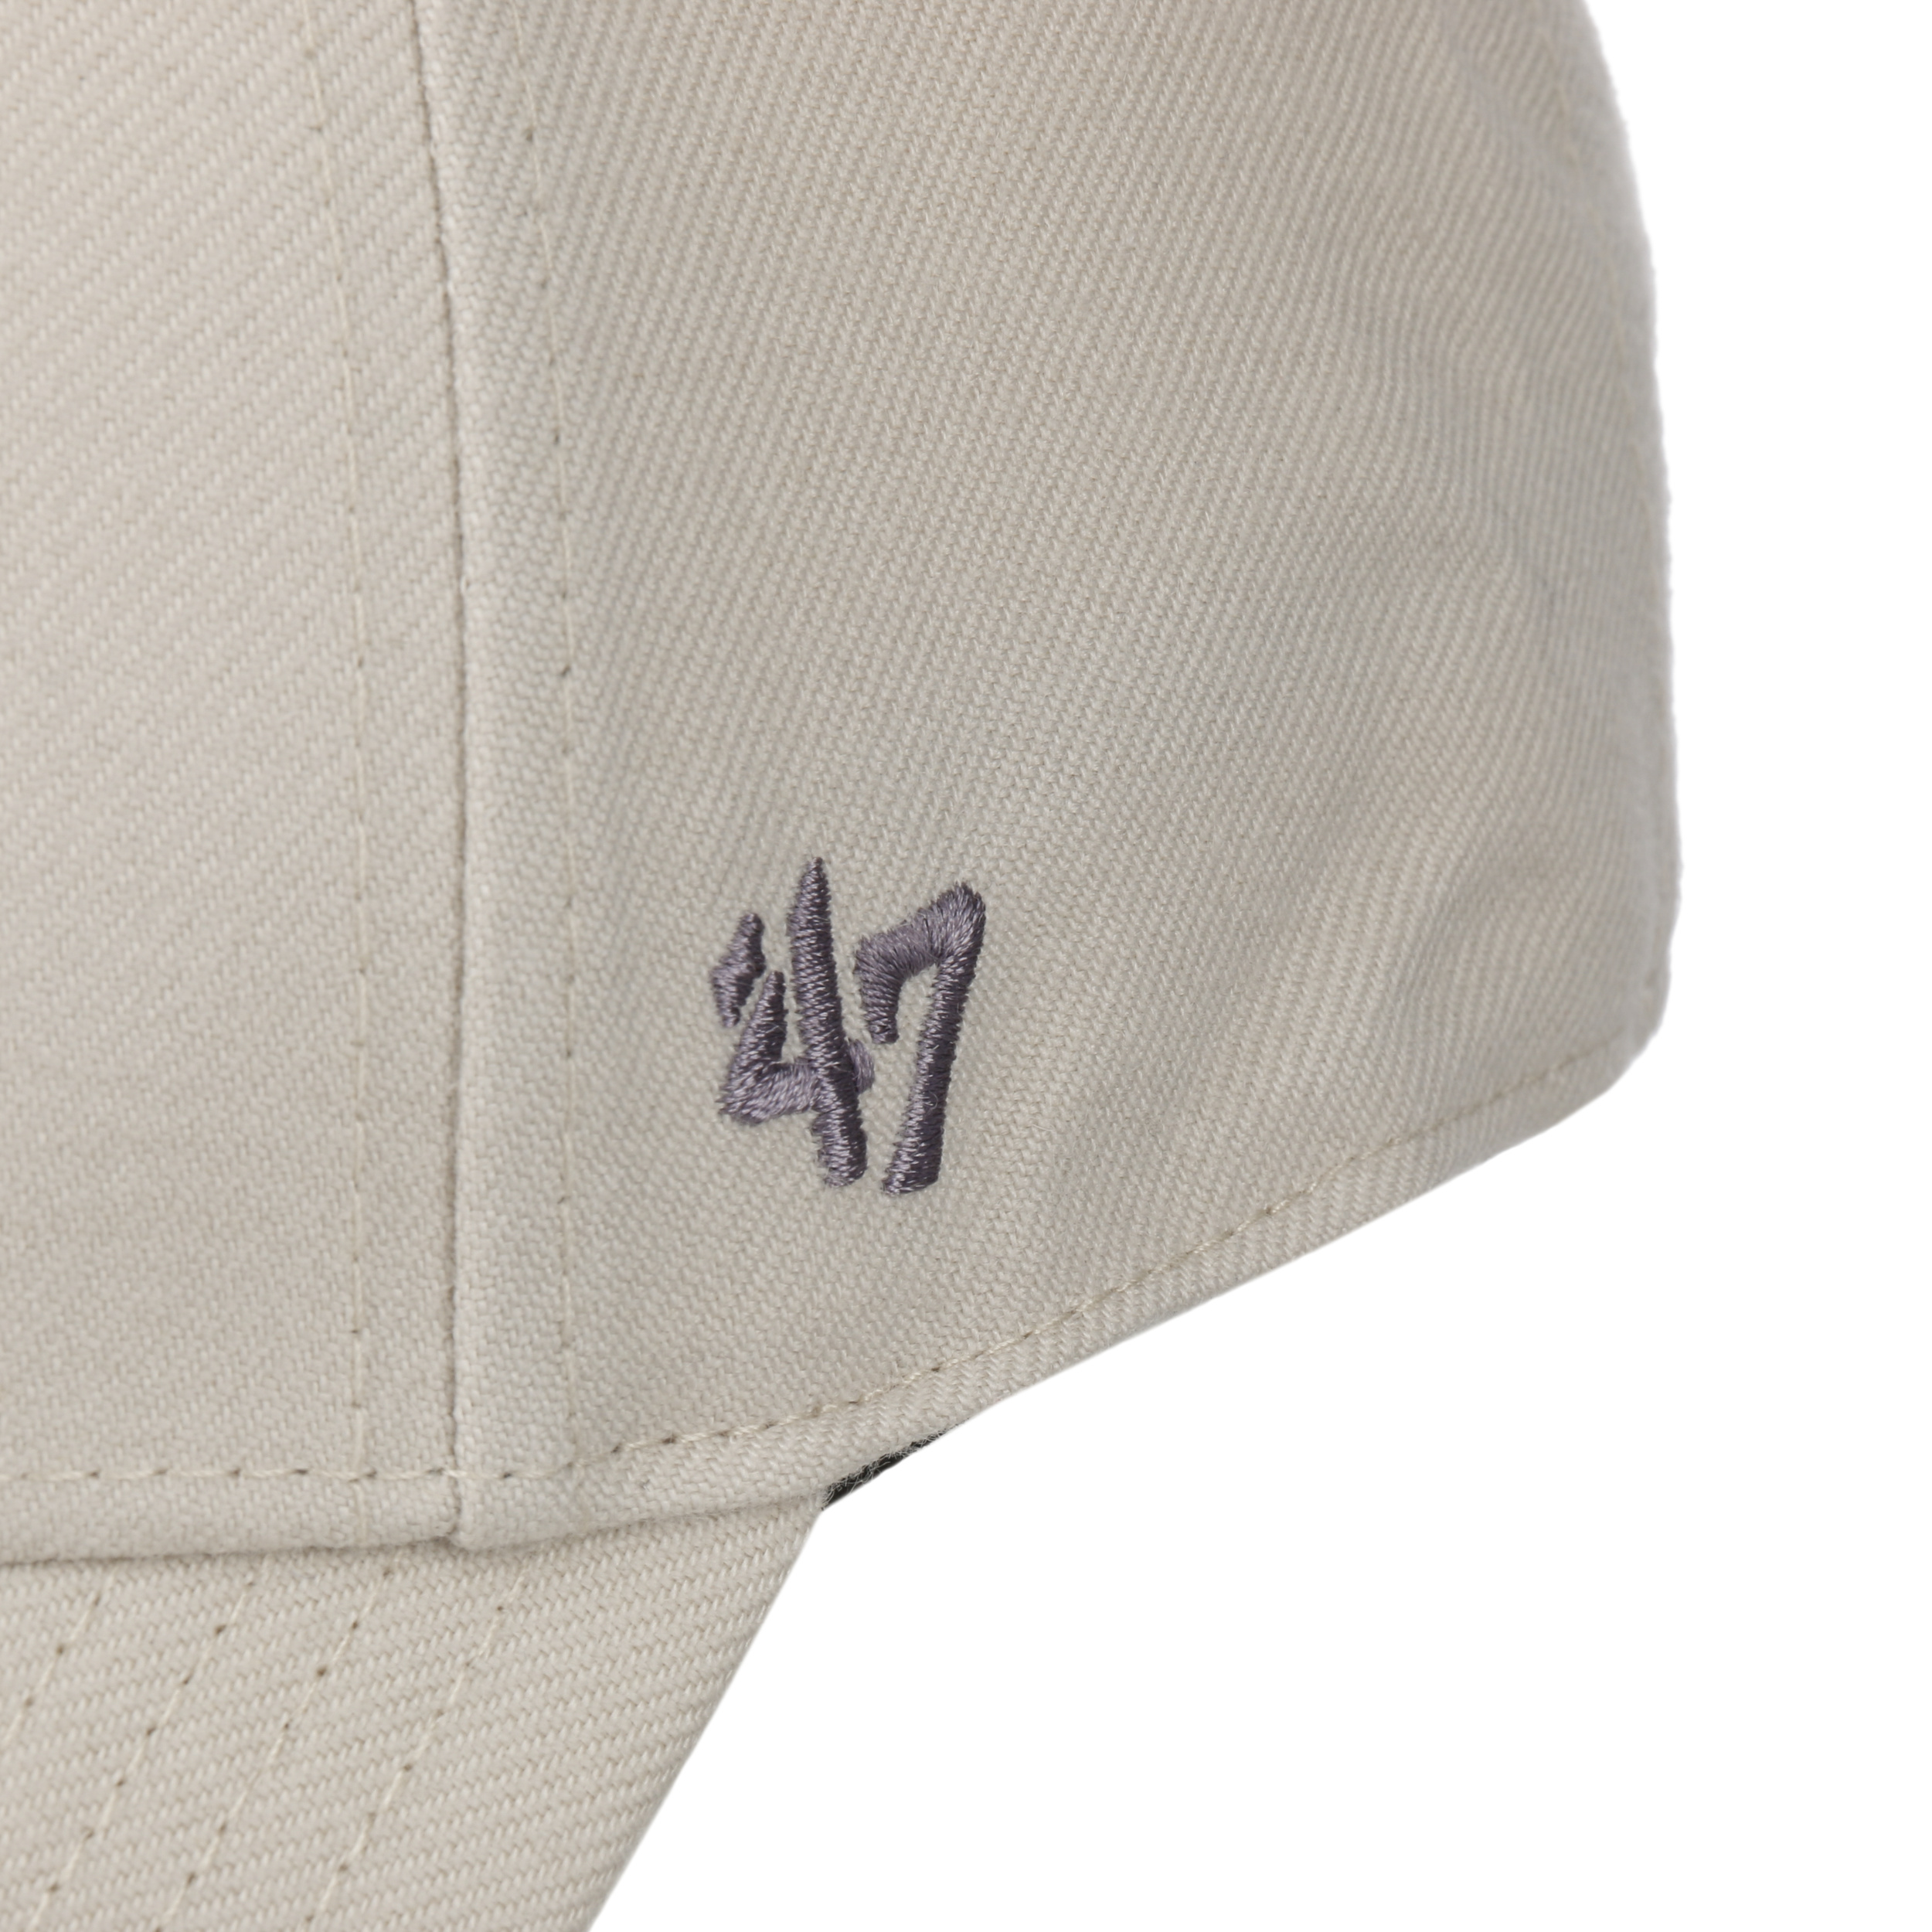 MLB Dodgers MVP Snapback Cap by 47 Brand